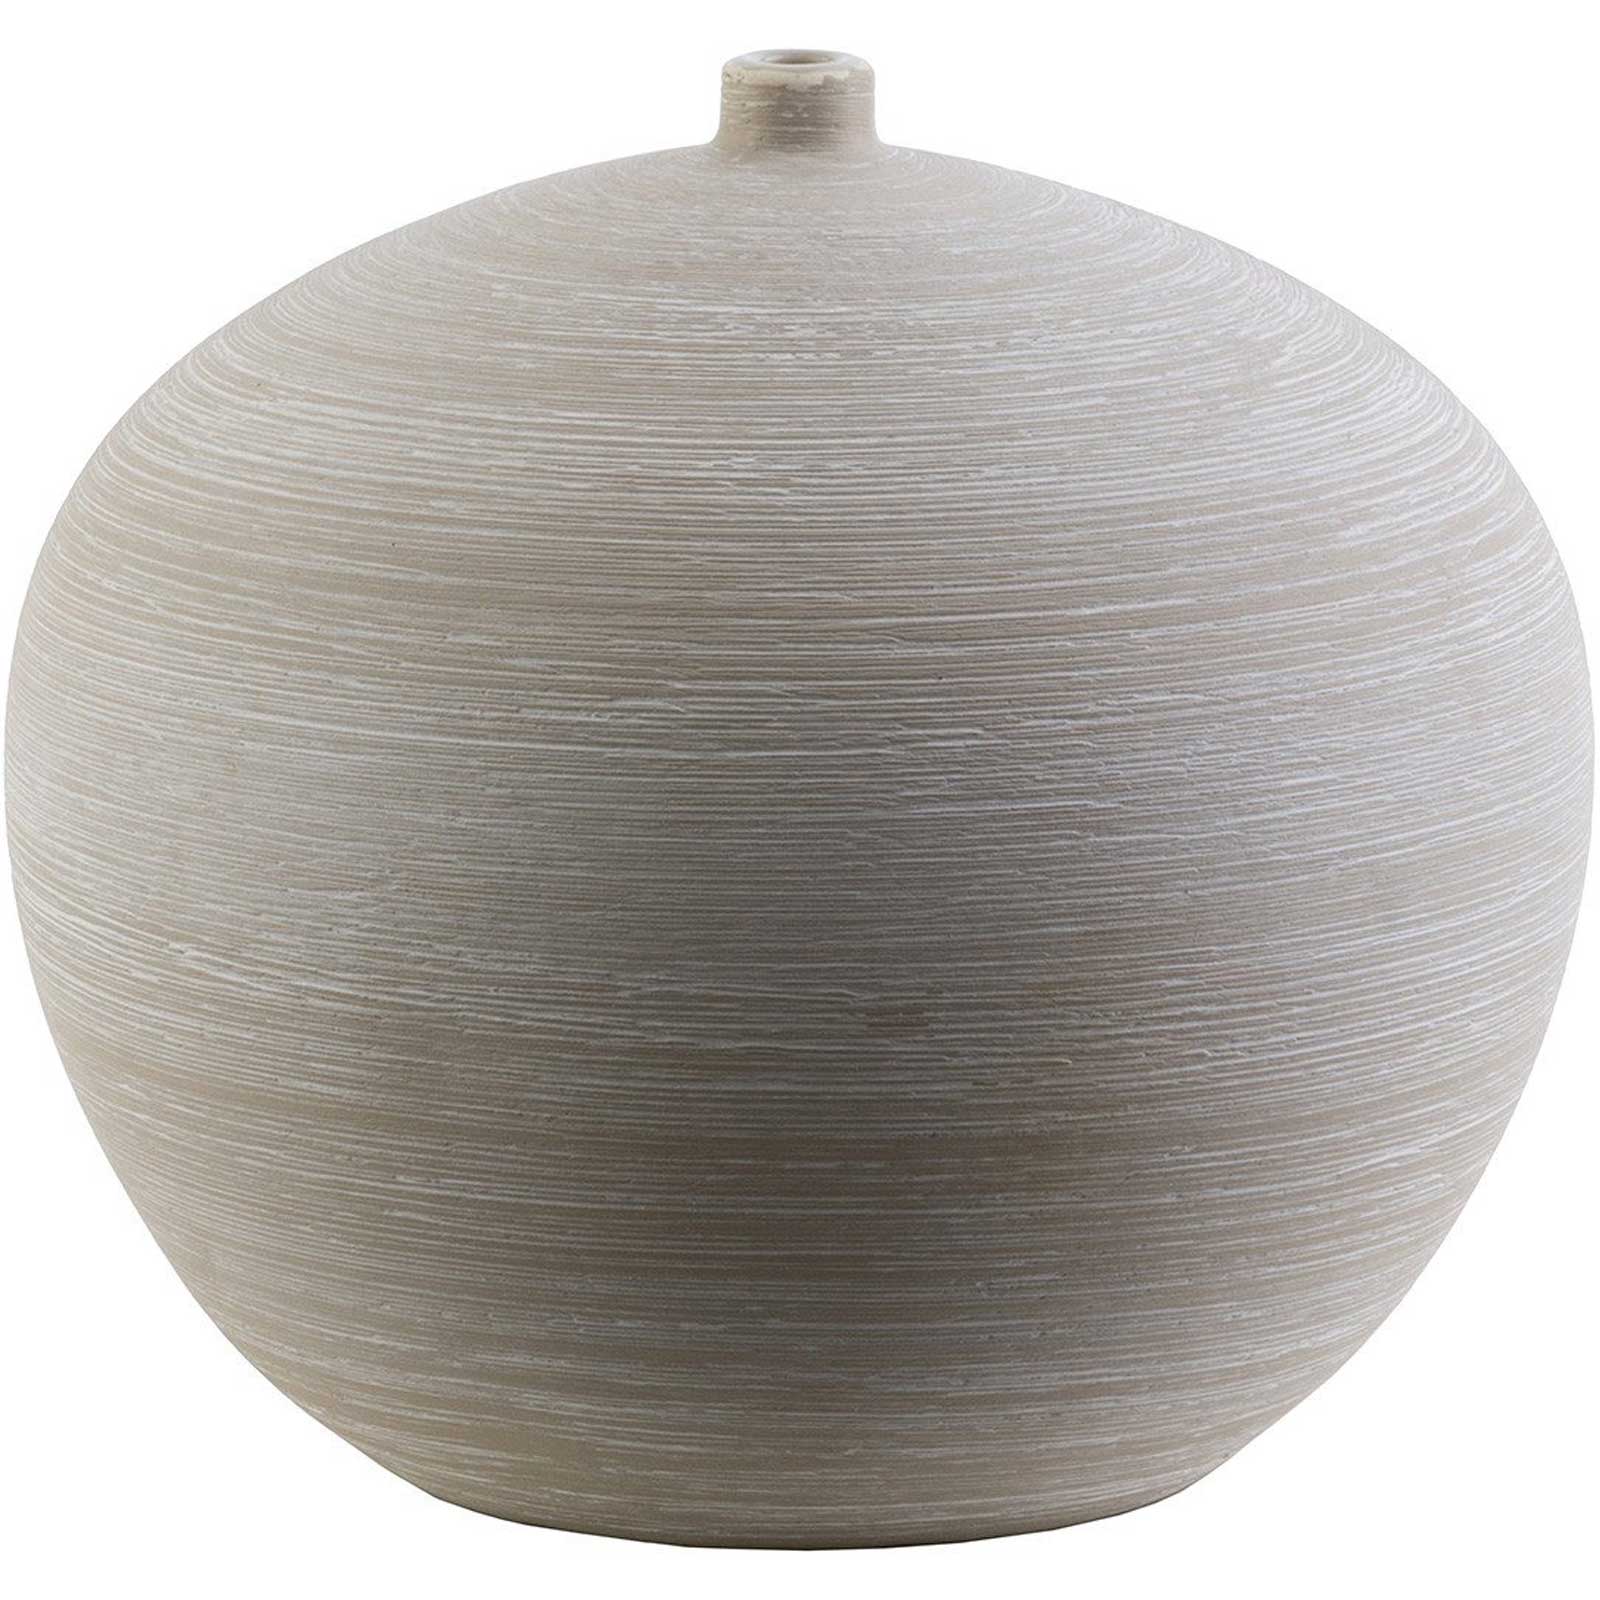 Bautista Ceramic Table Vase Gray Large